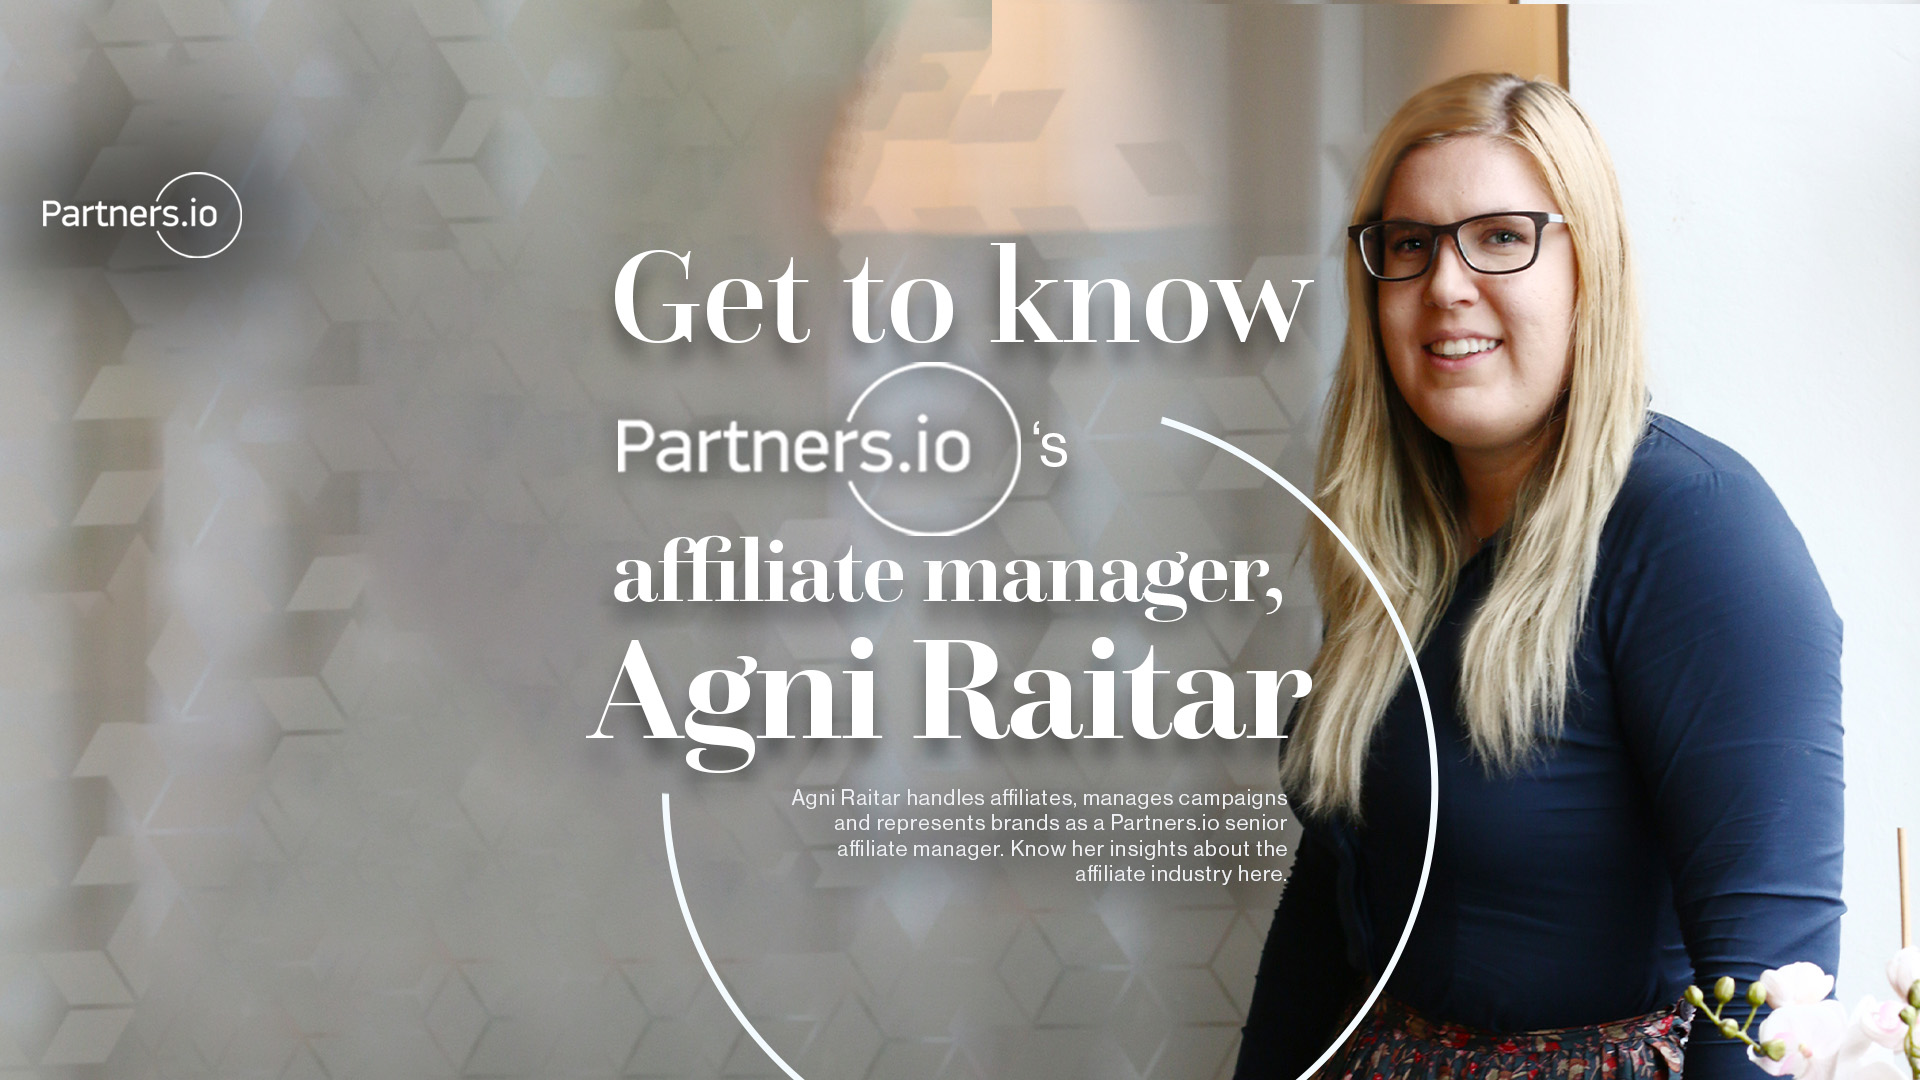 Life of an affiliate manager: Get to know Agni Raitar